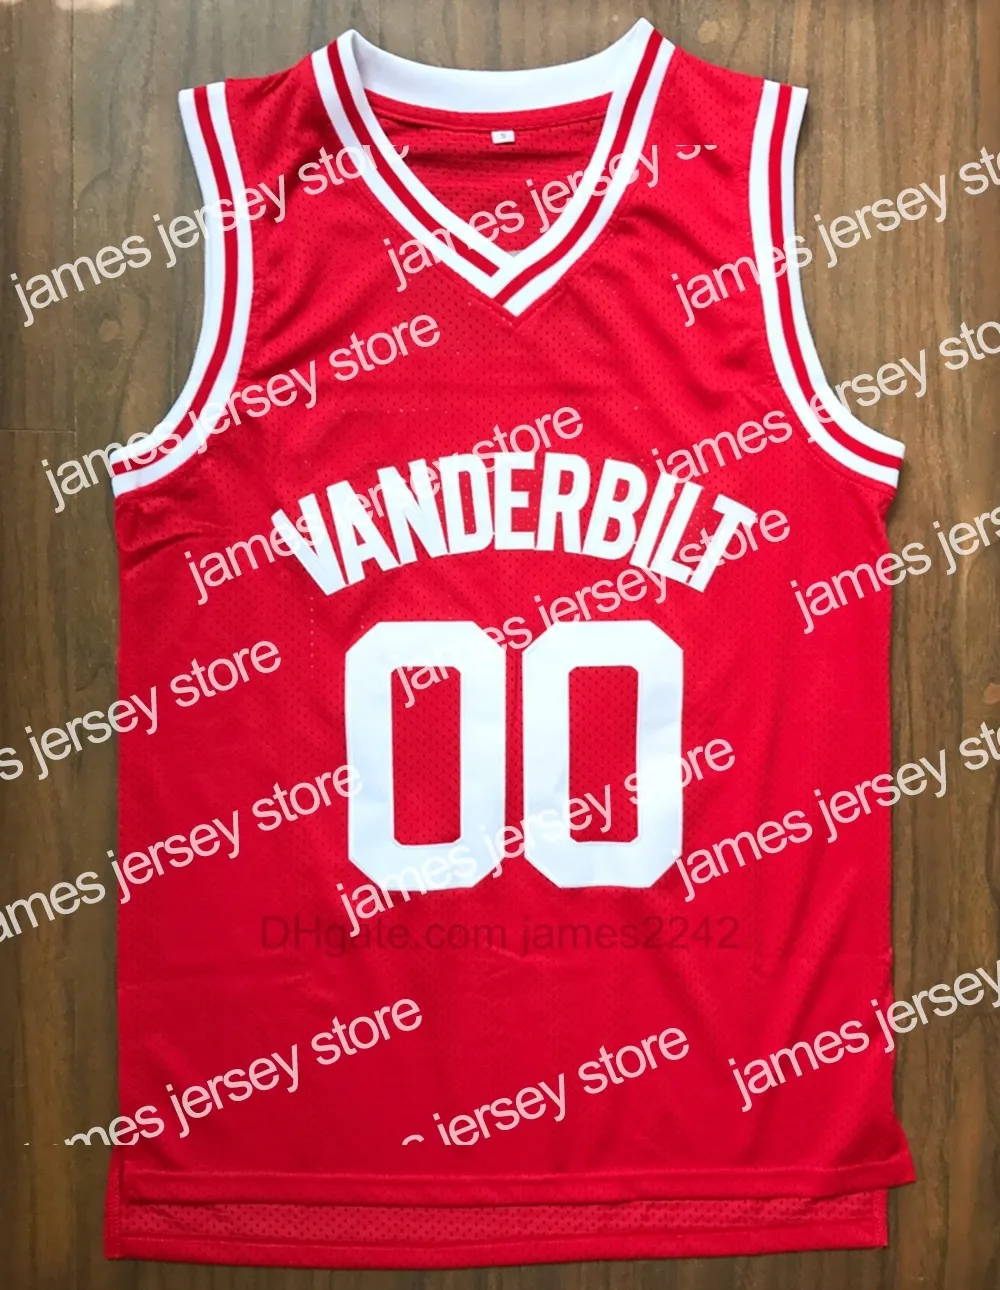 Jerseys de basquete Steve Urkel #00 Vanderbilt HS Jersey de basquete masculino All Stitched Red Size S-xxl Sport Top Quality